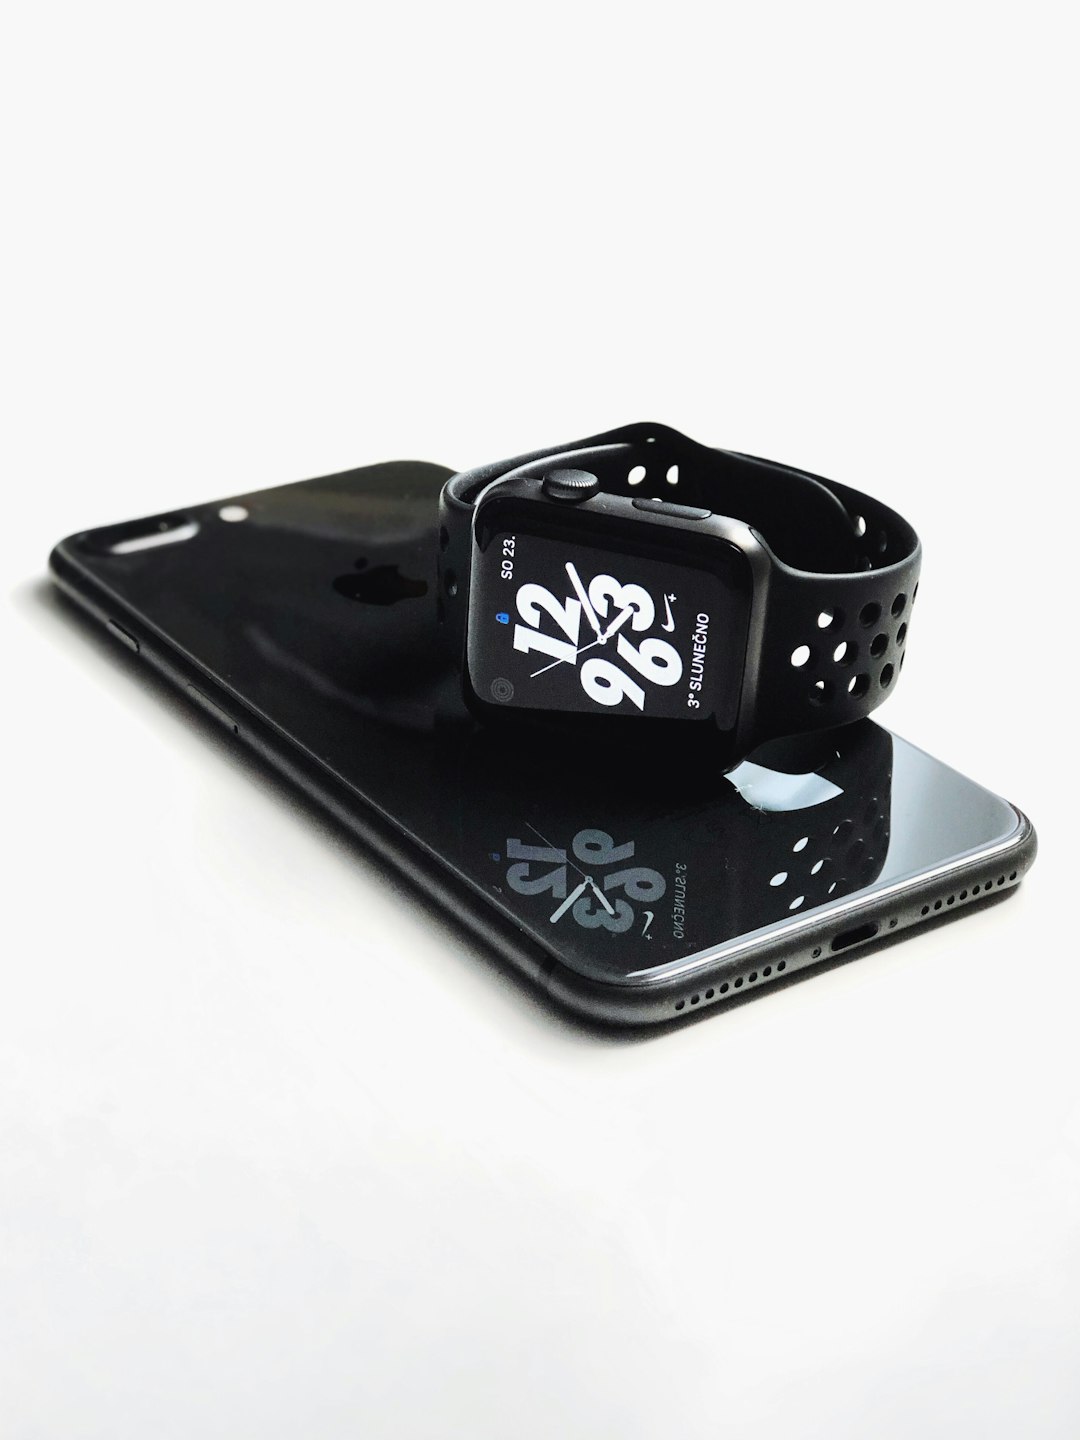 iPhone 8 plus + Apple Watch